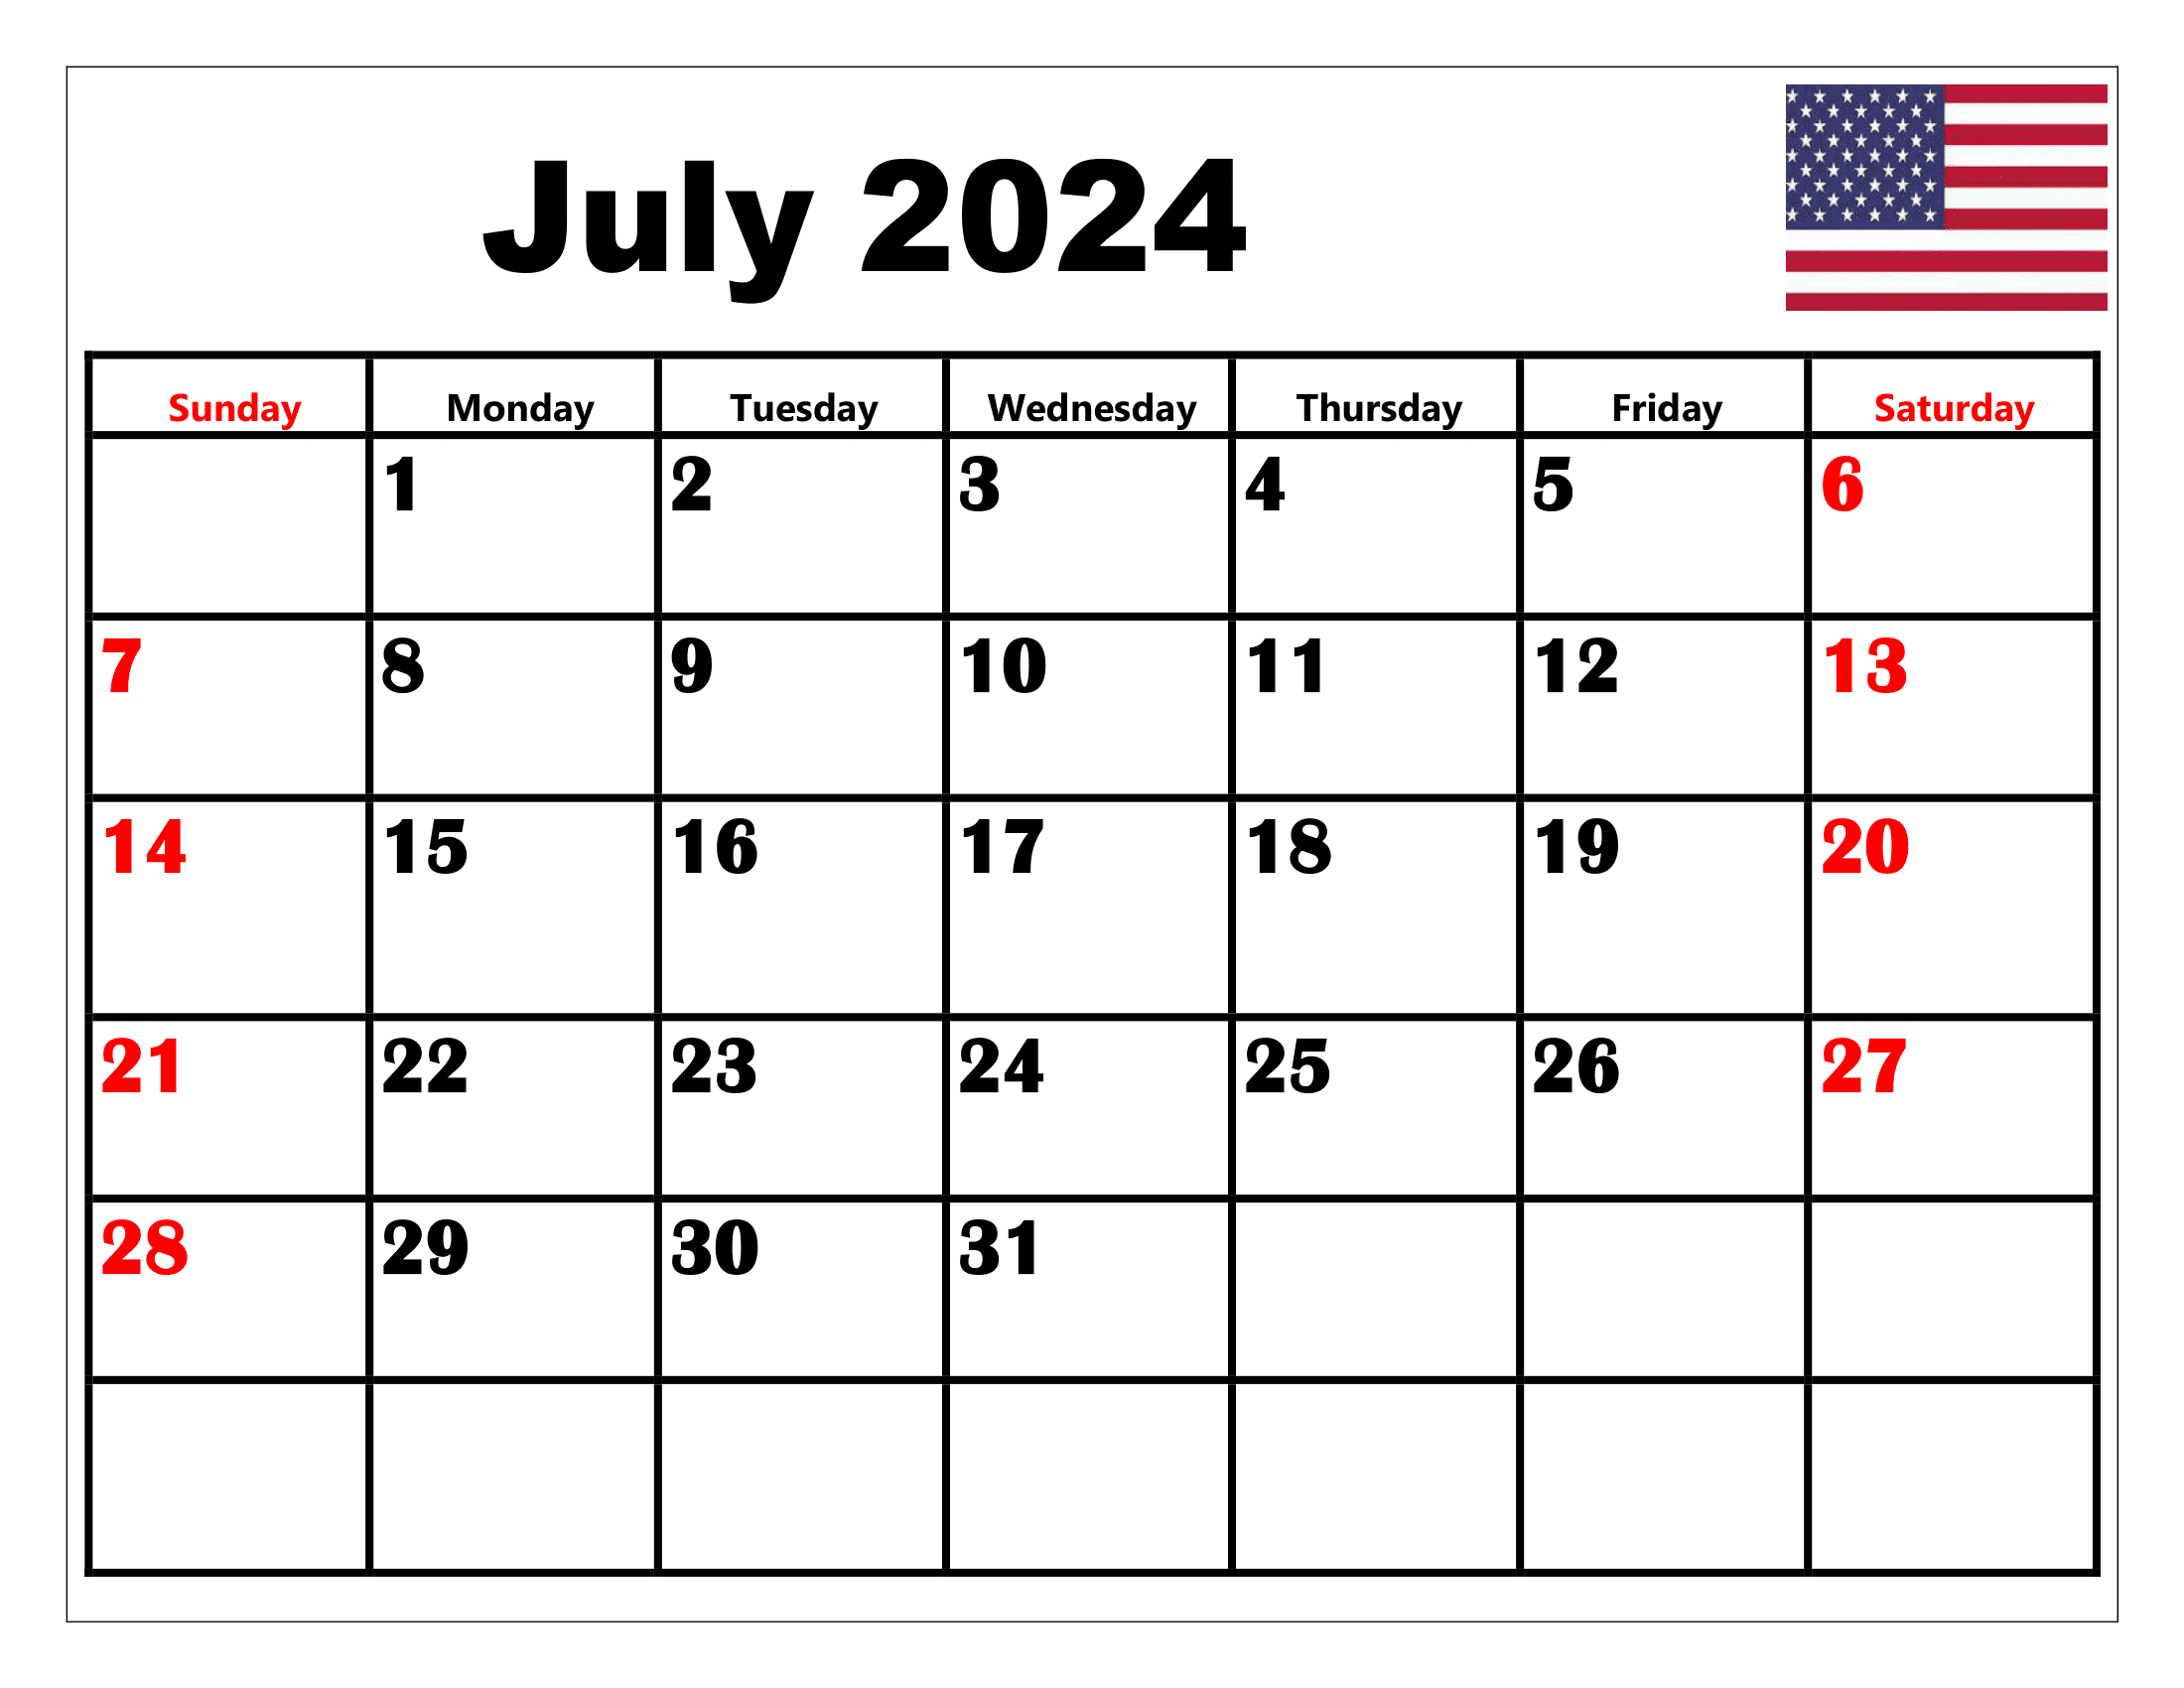 July 2024 Calendar Printable Pdf With Holidays Free Template within Calendar July 2024 With Holidays